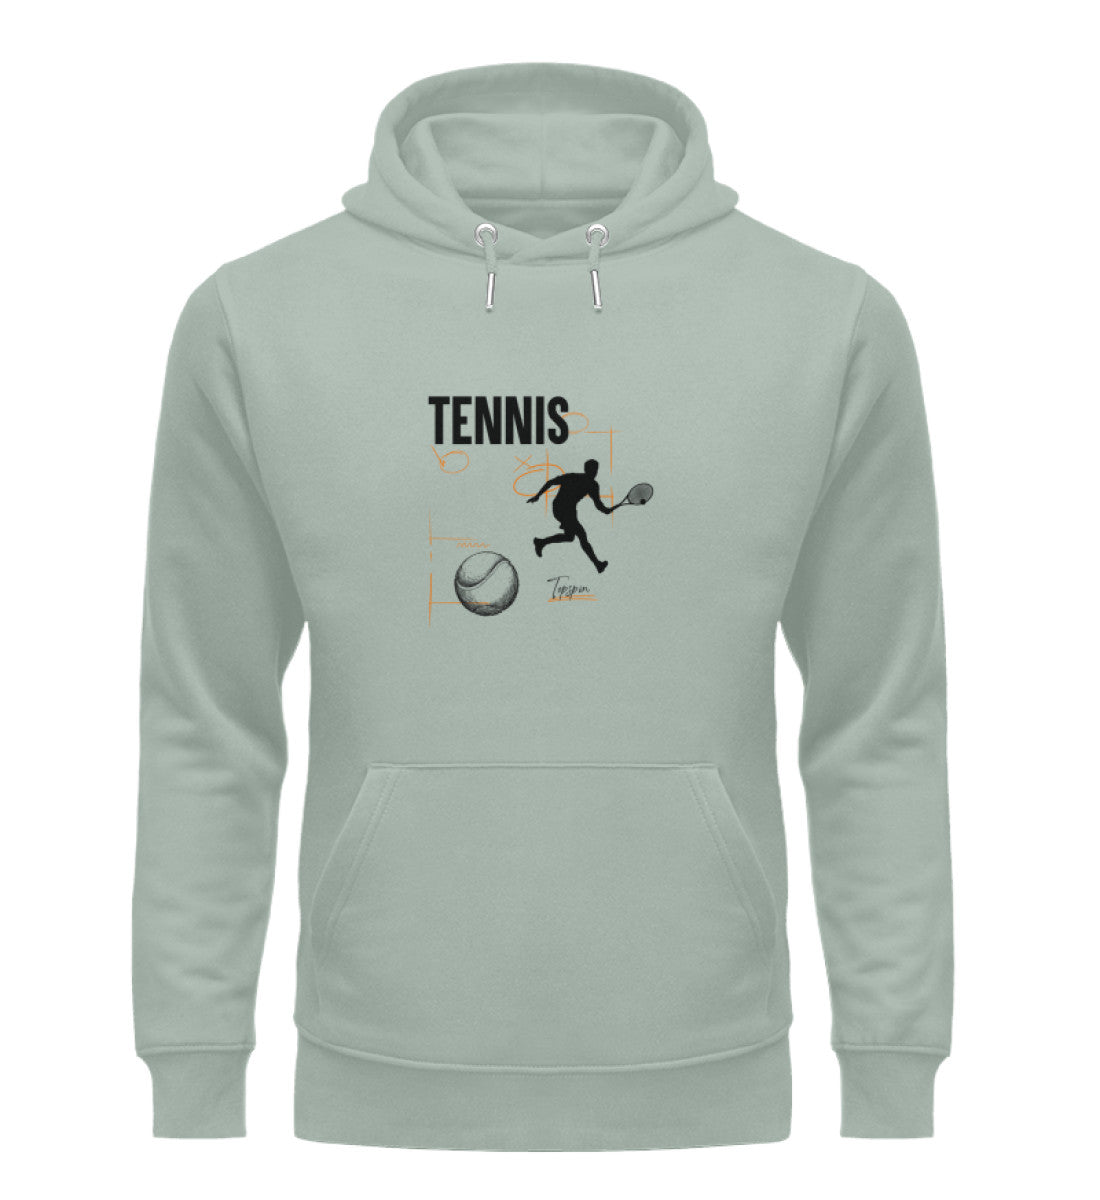 Tennis Topspin  - Unisex Organic Hoodie